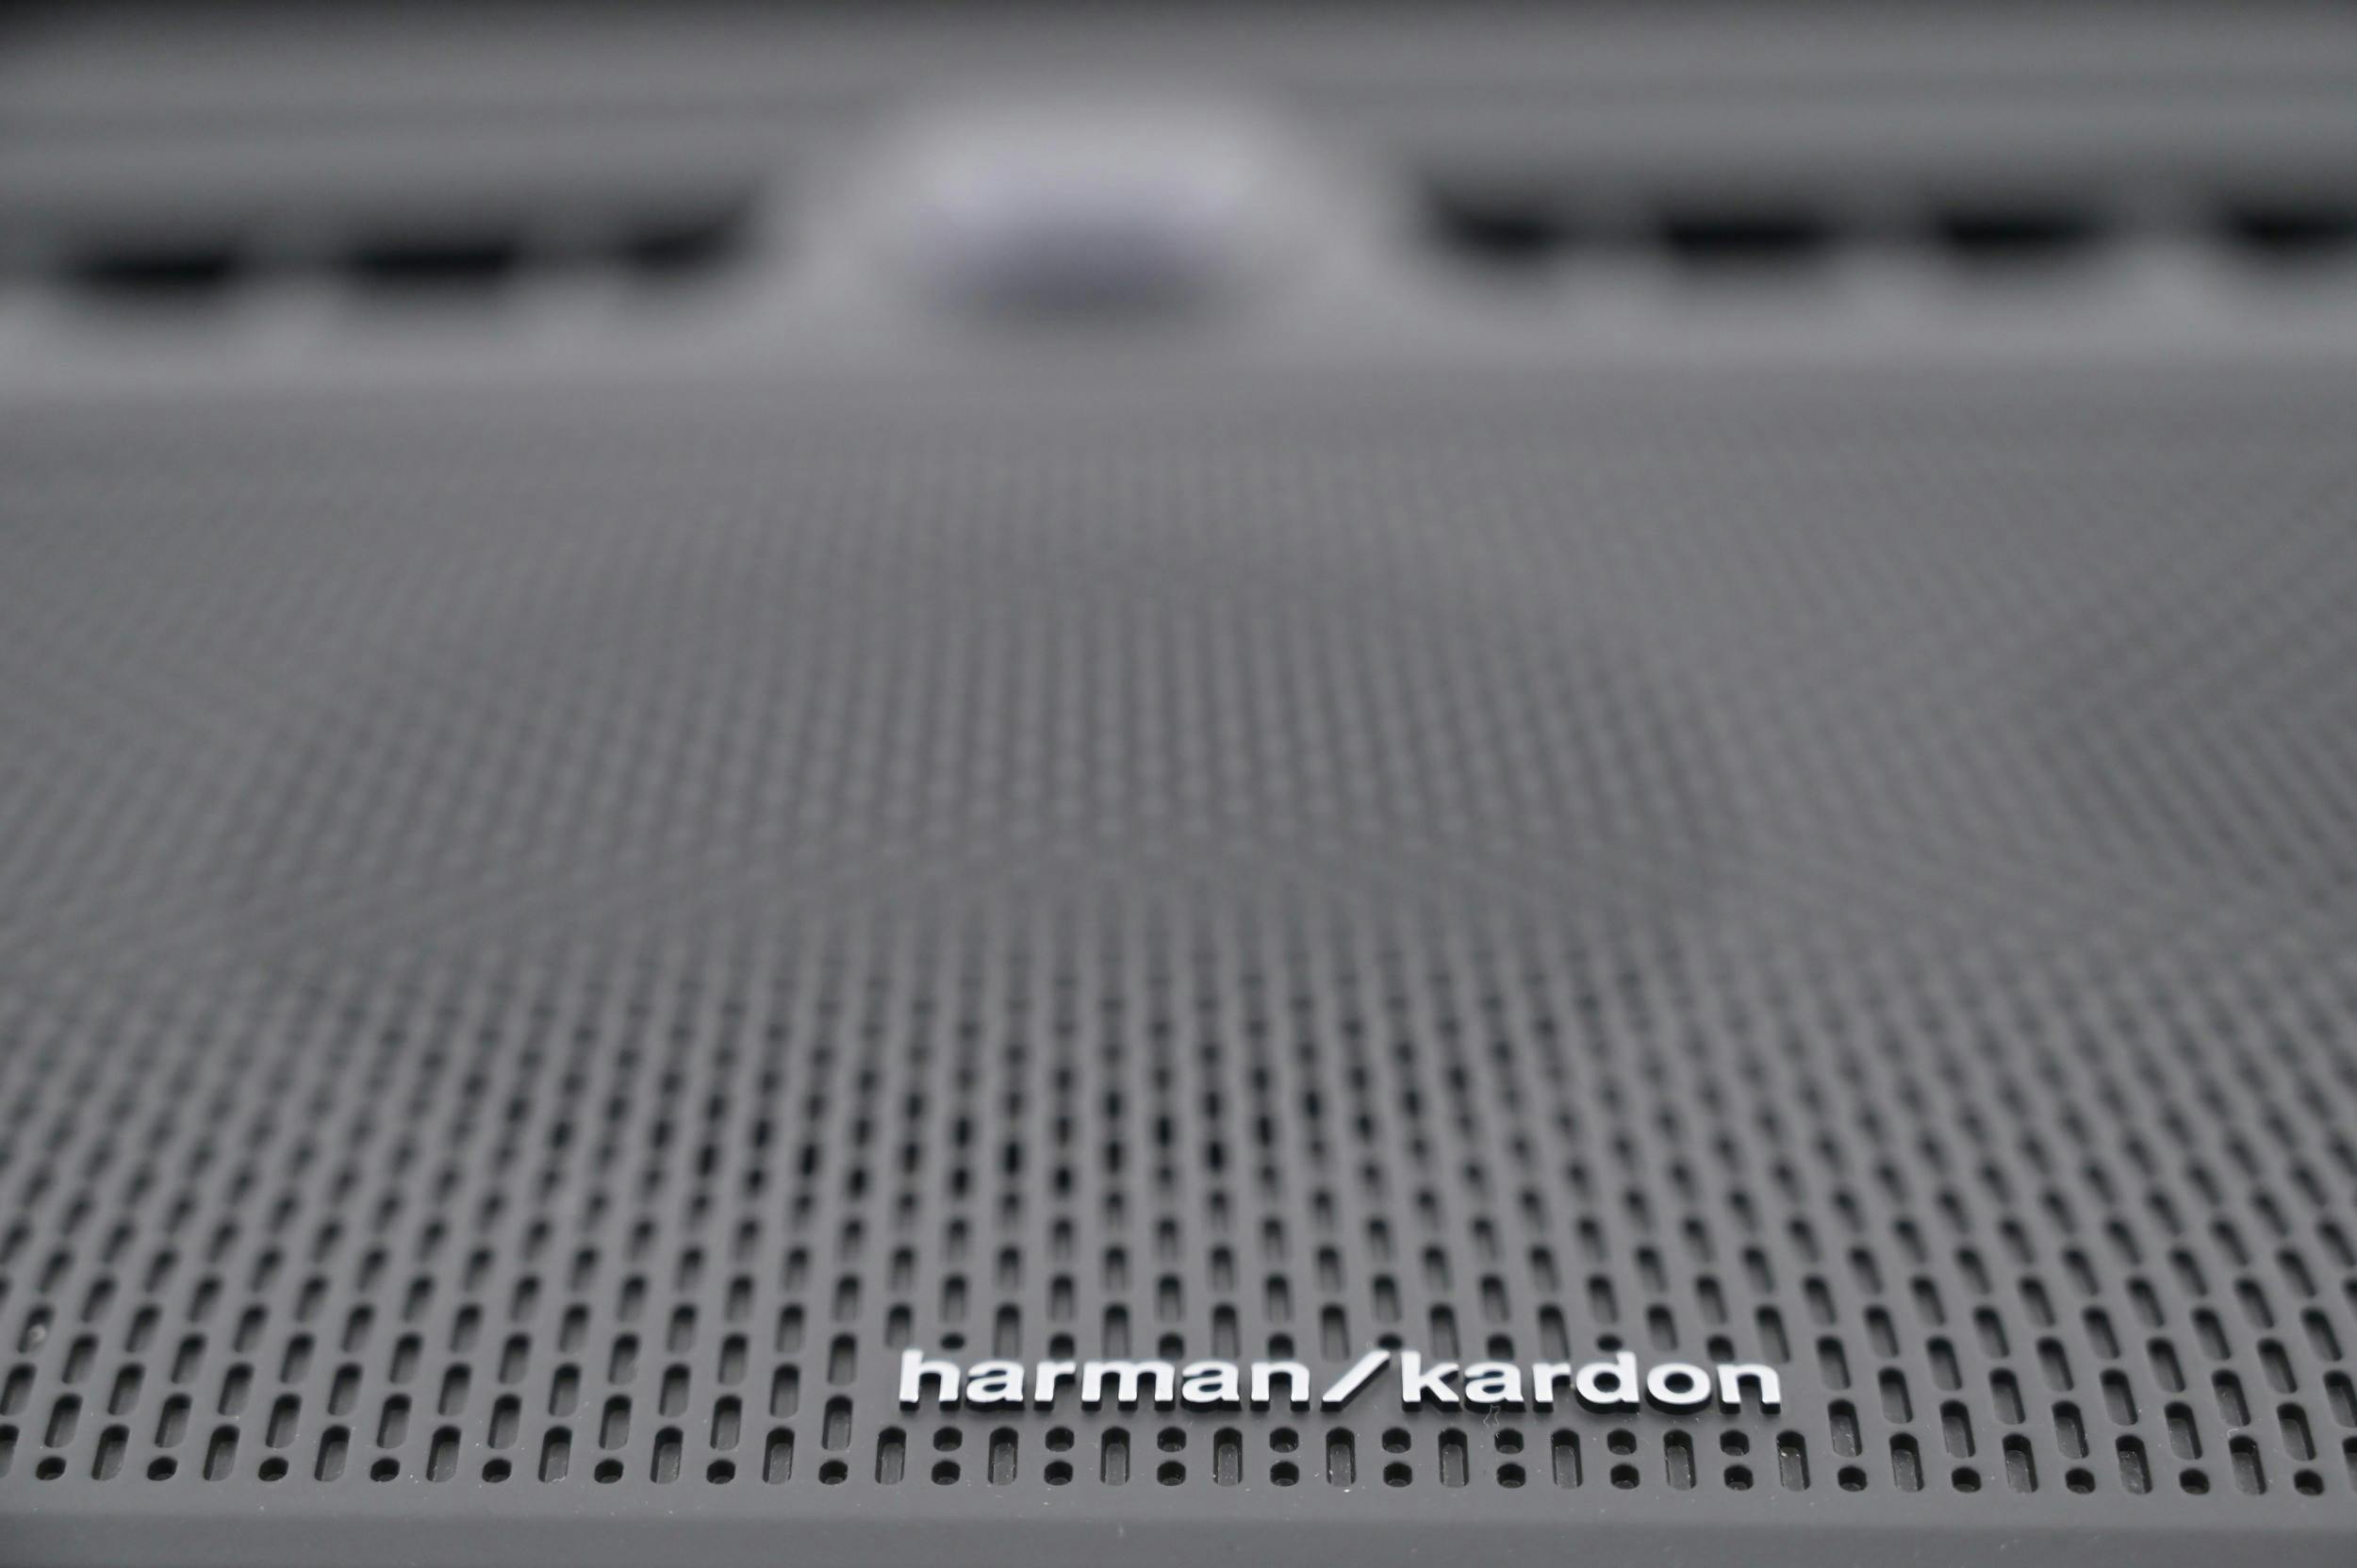 Harman Kardon Premium Sound